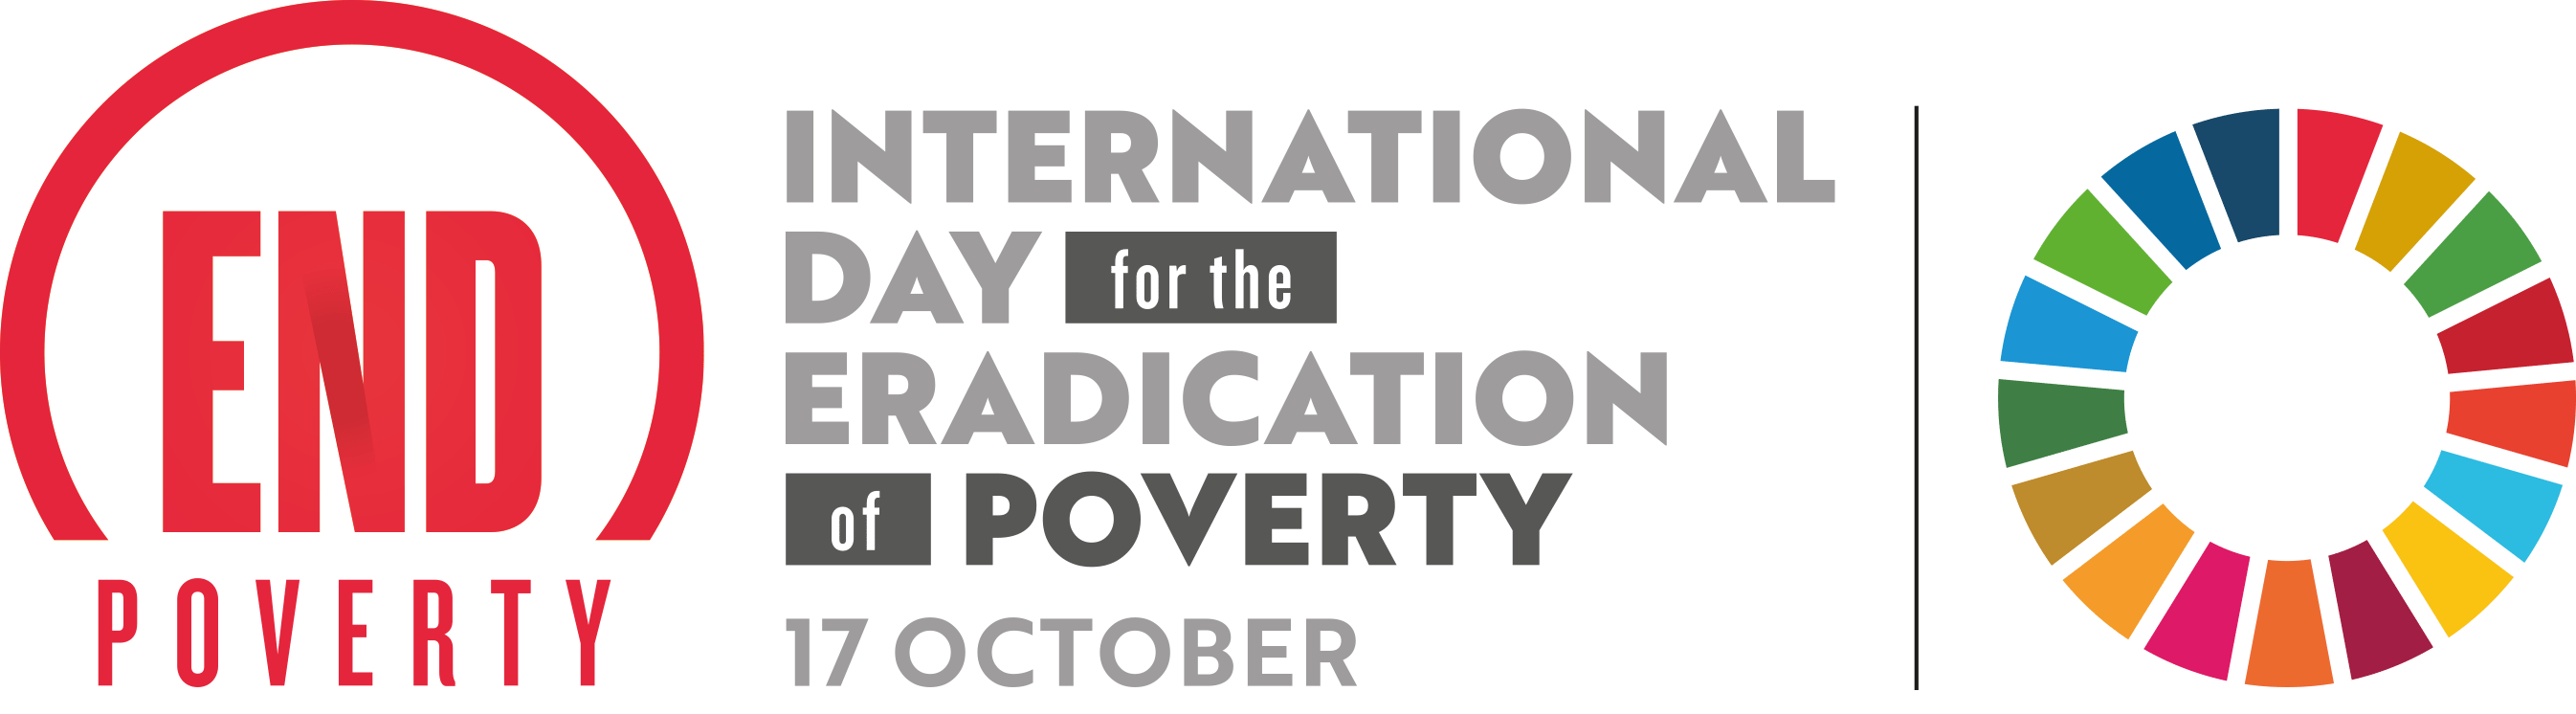 International Poverty Day